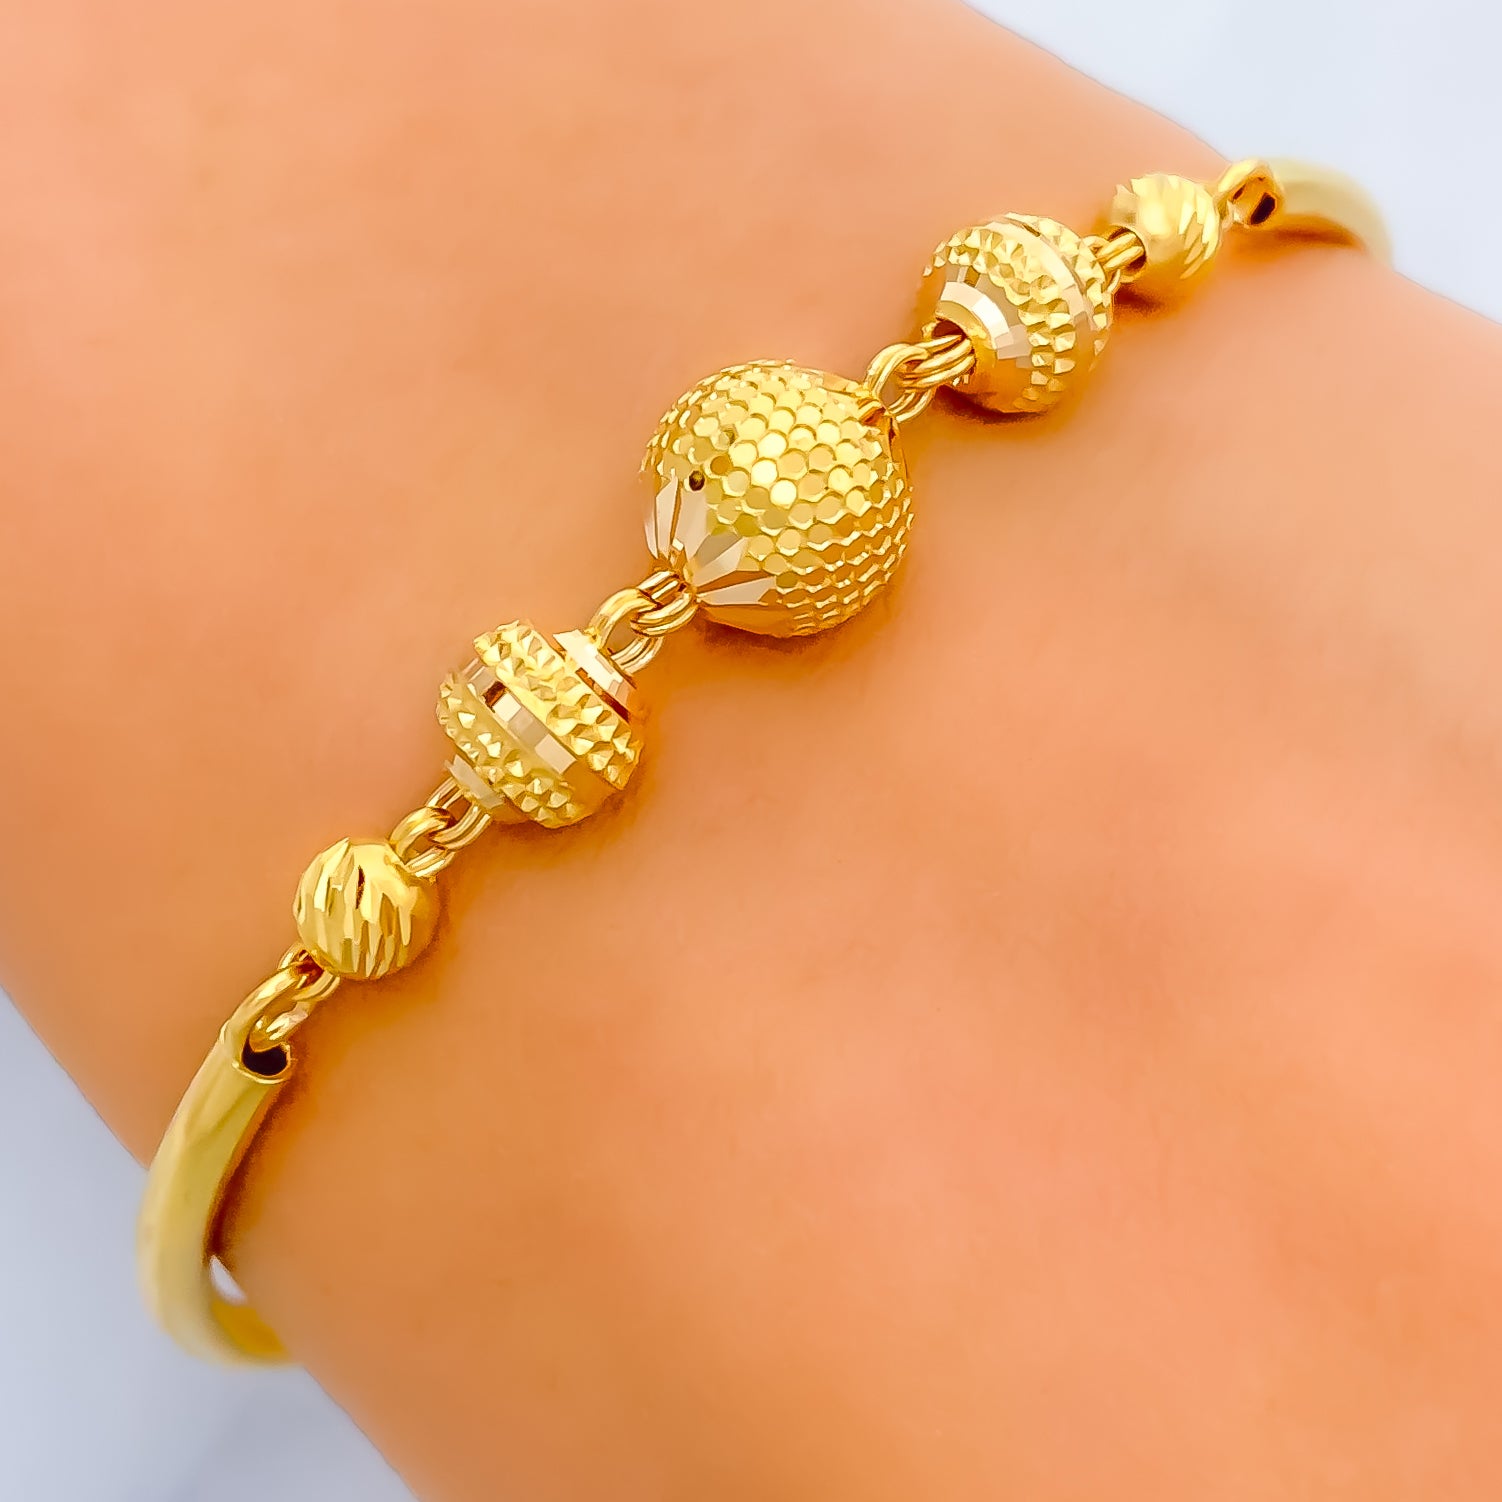 Buy quality 800 silver fancy bracelet in Ahmedabad